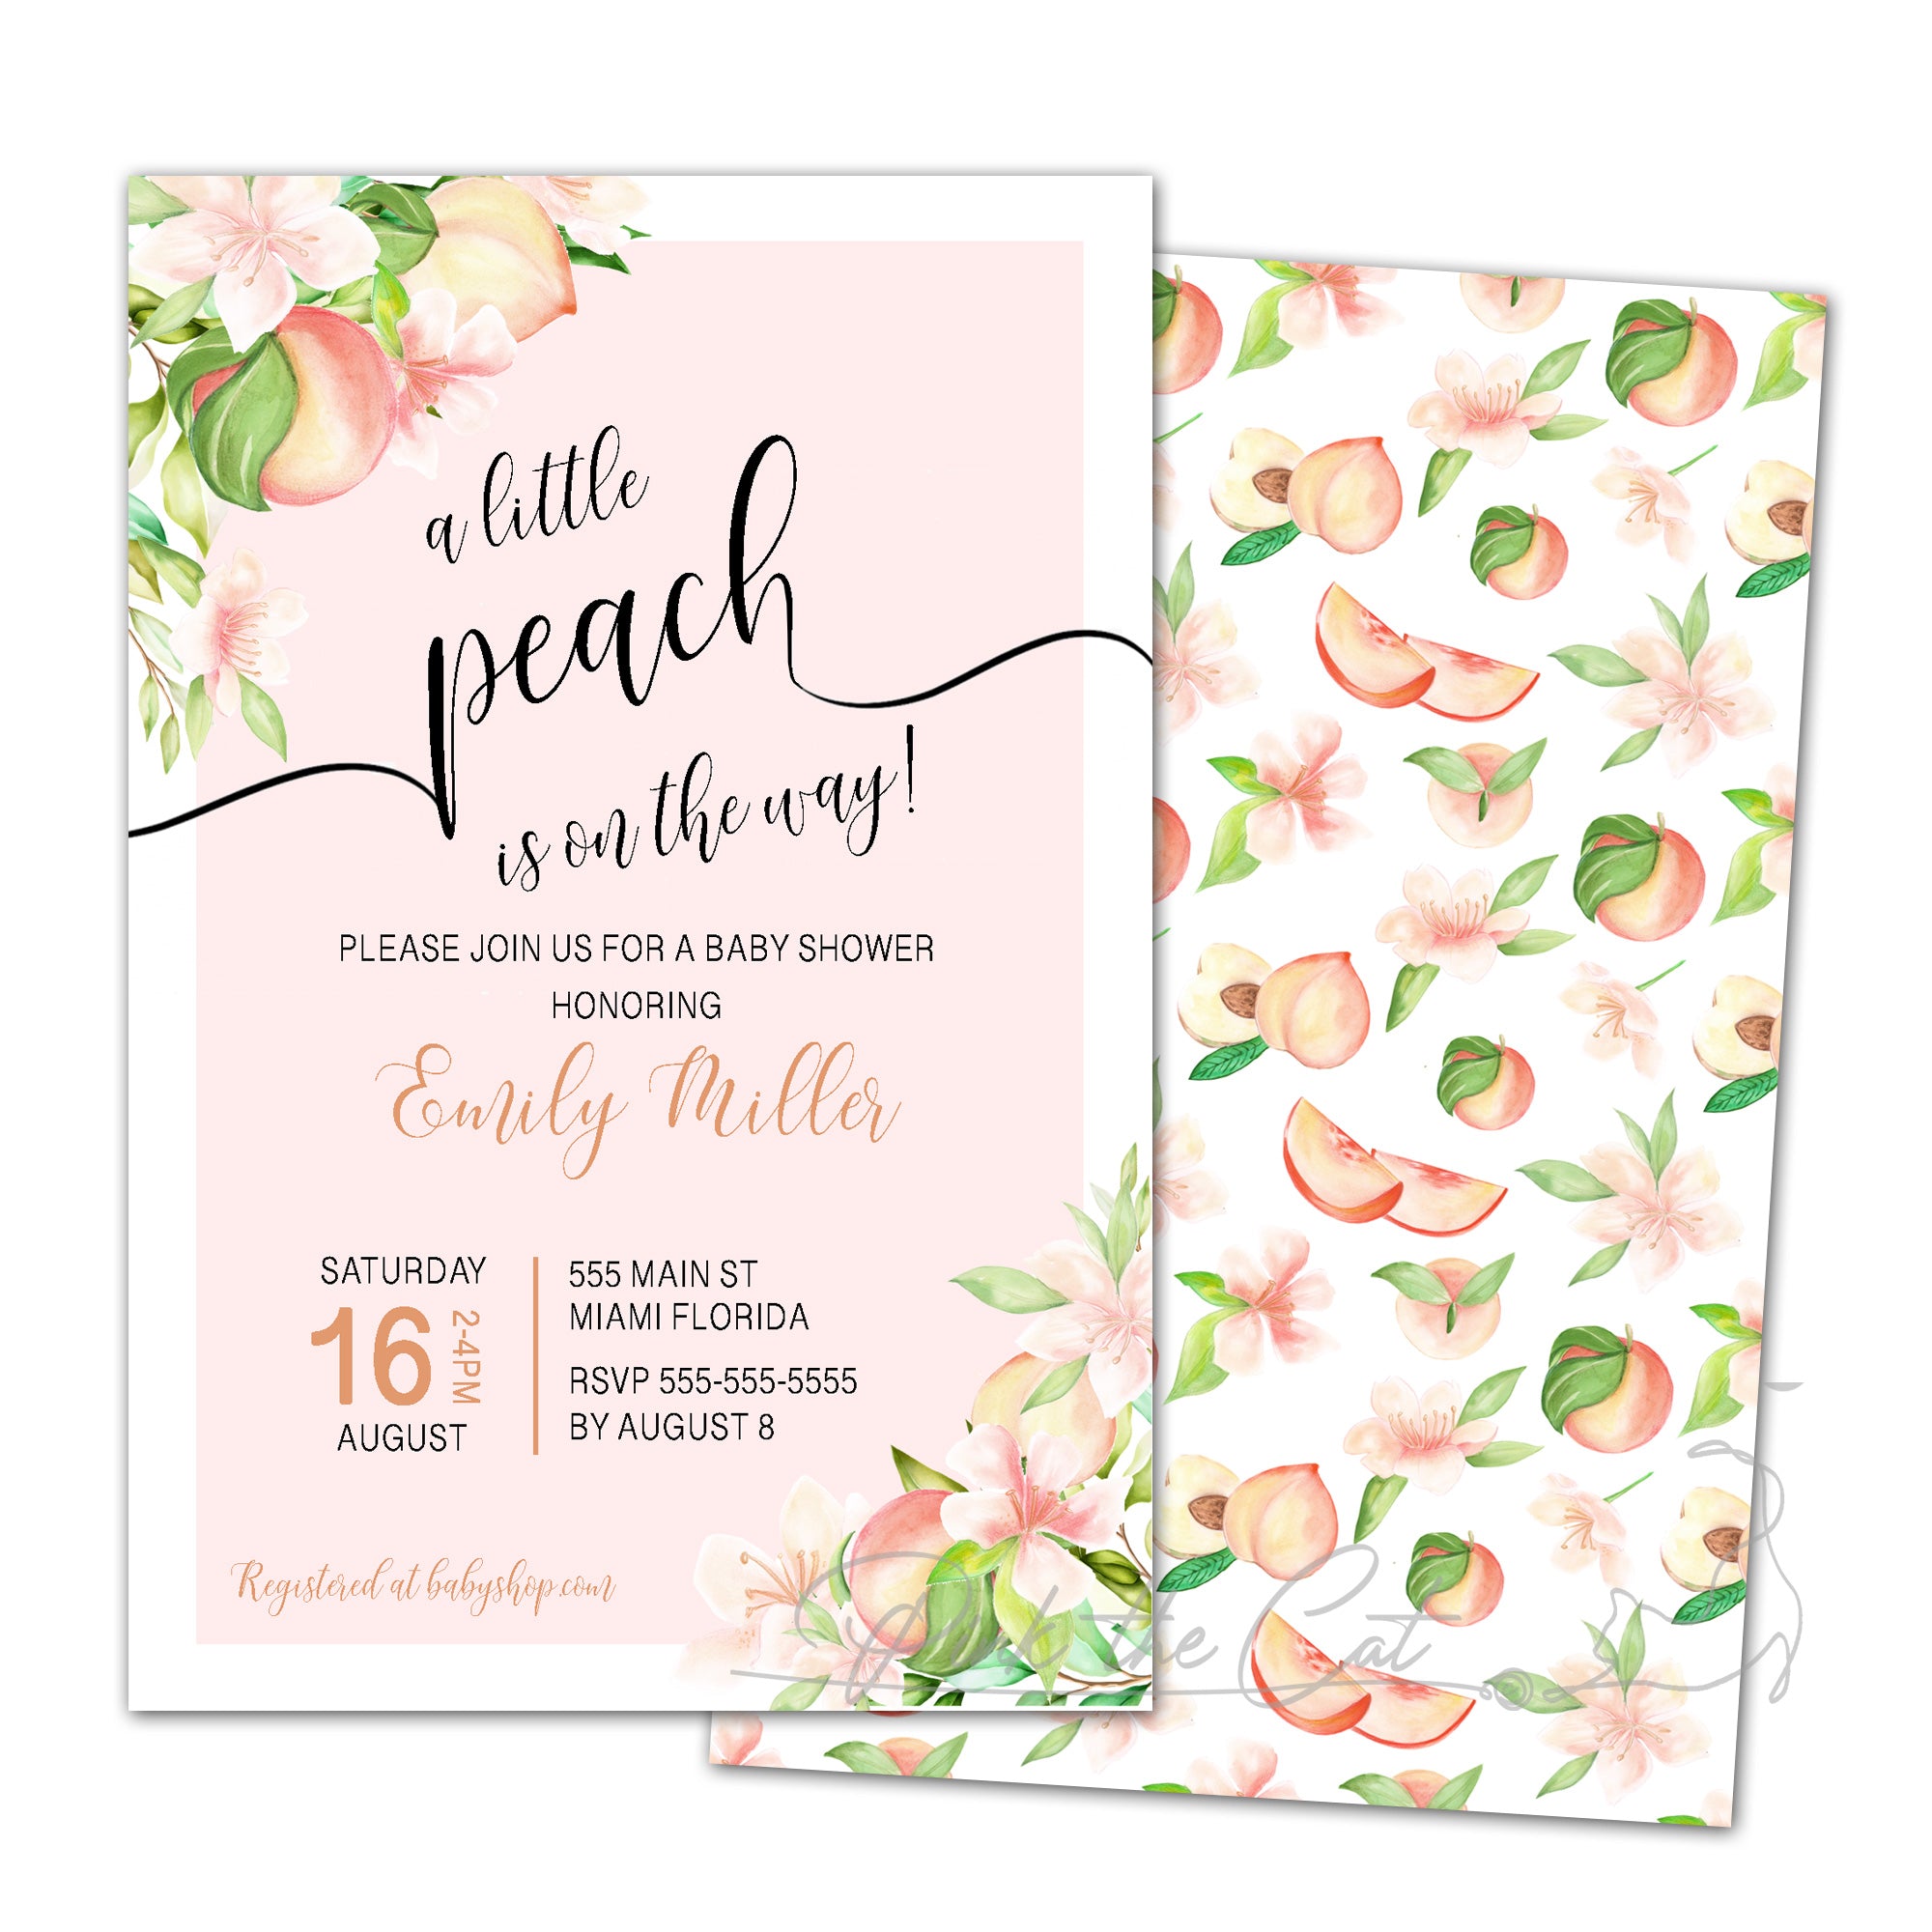 Little peach on the way invitation